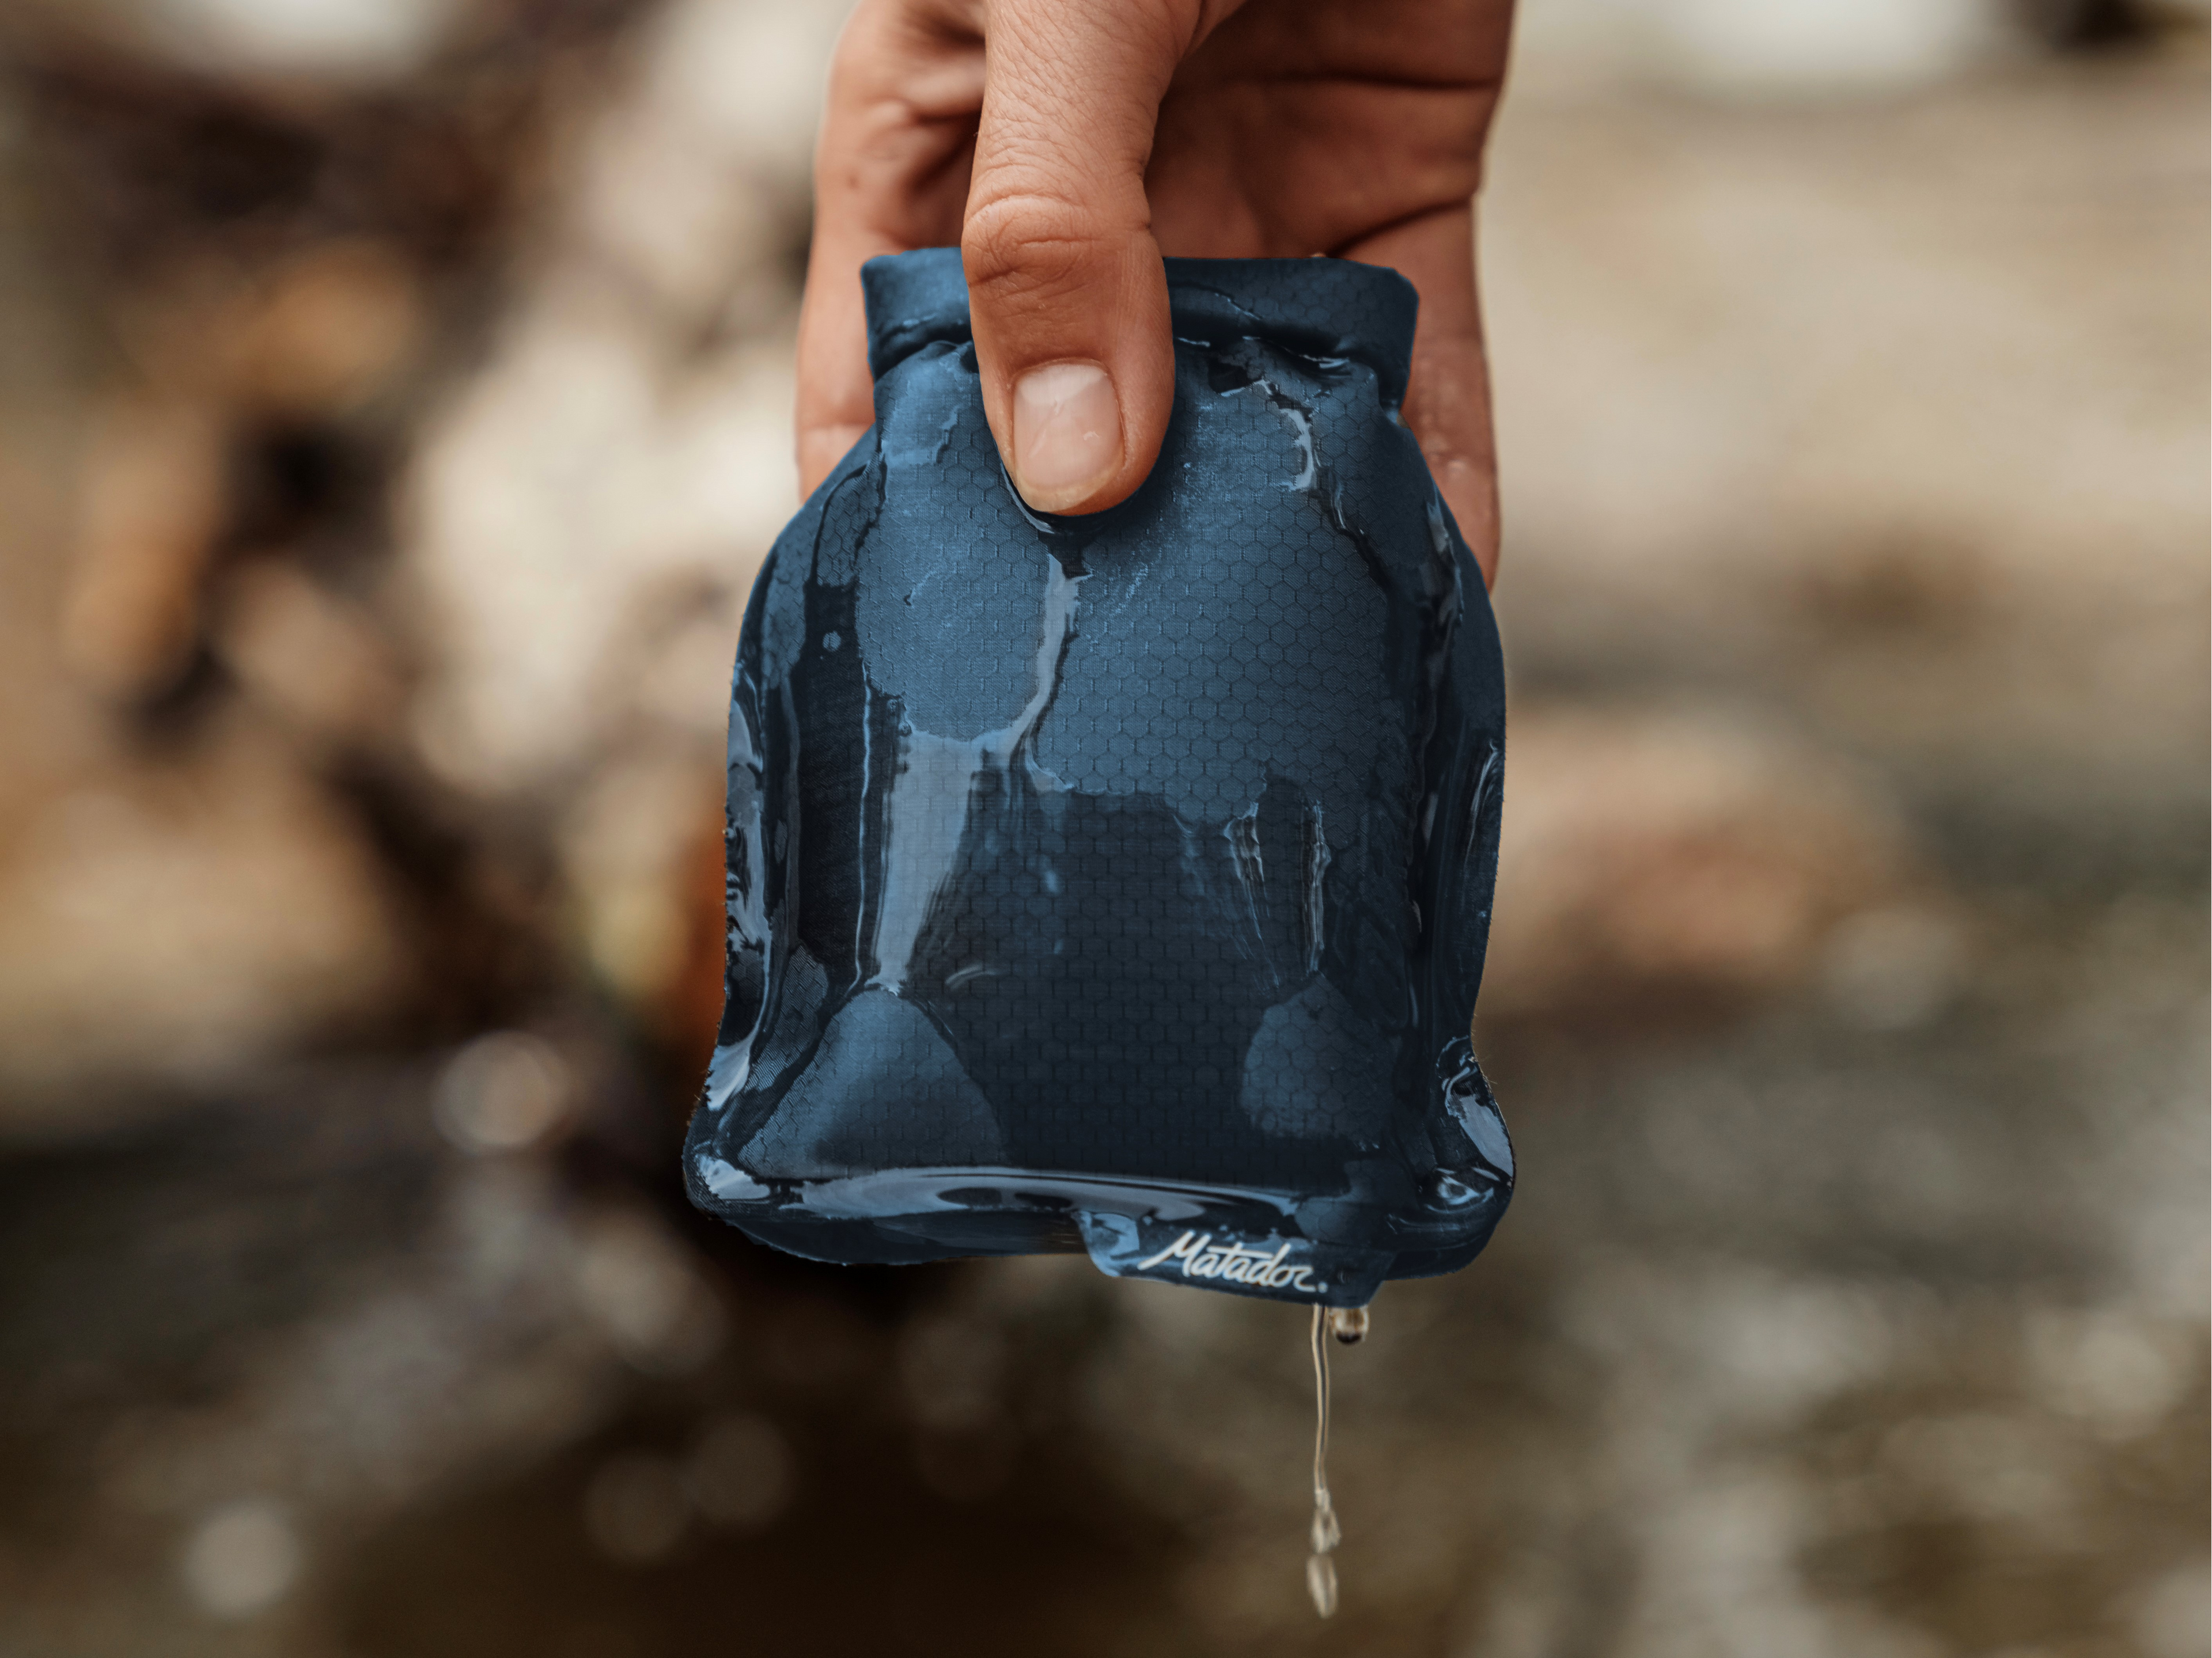 A&F COUNTRY的Matador 平箱包装 便携肥皂袋